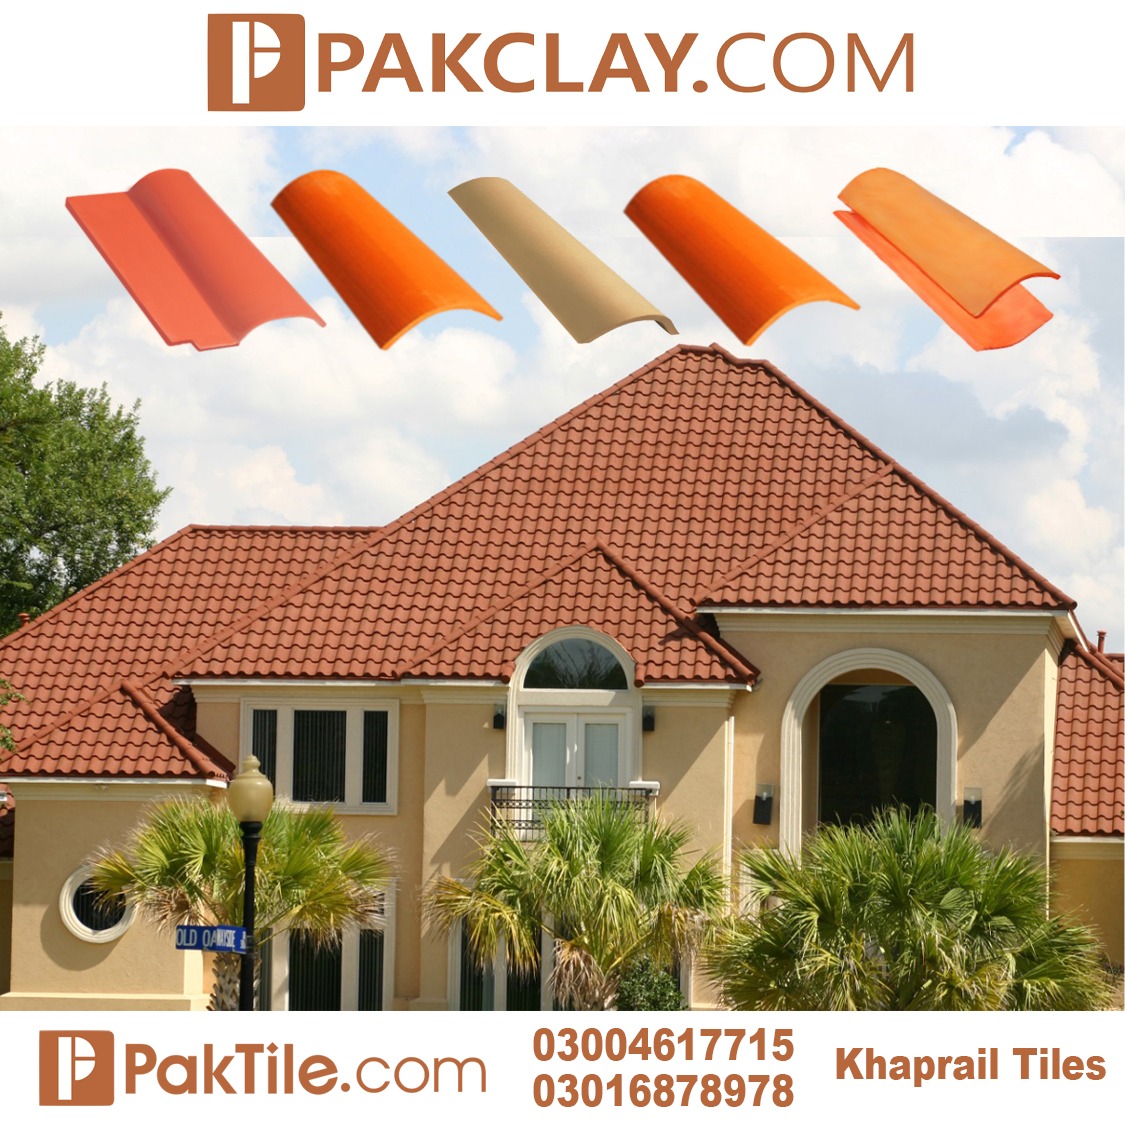 1 Pak Clay Roof Tiles in Pakistan